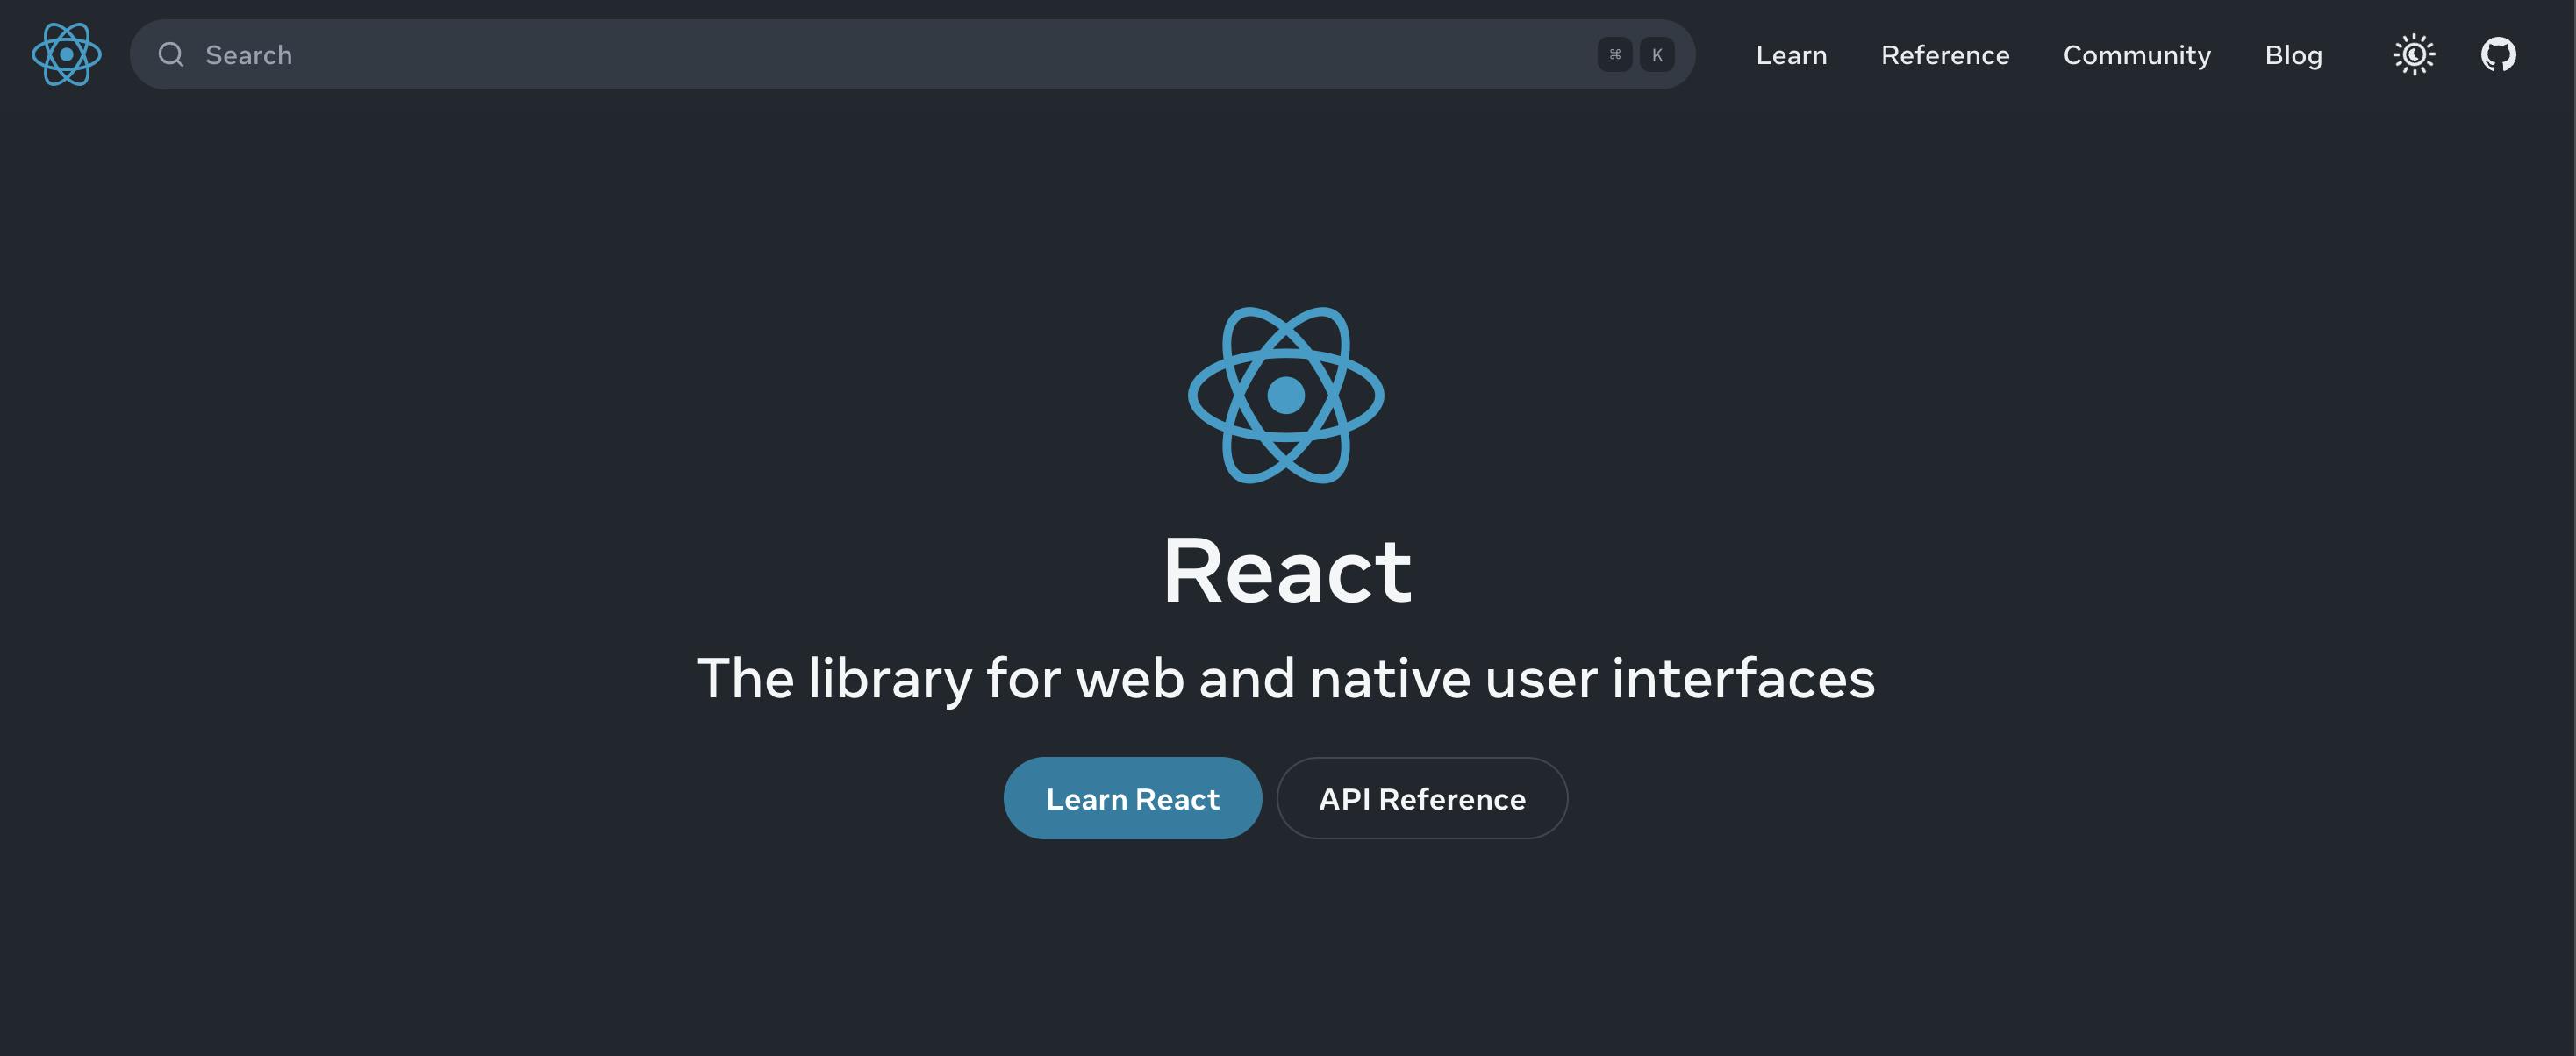 An image of React's website.